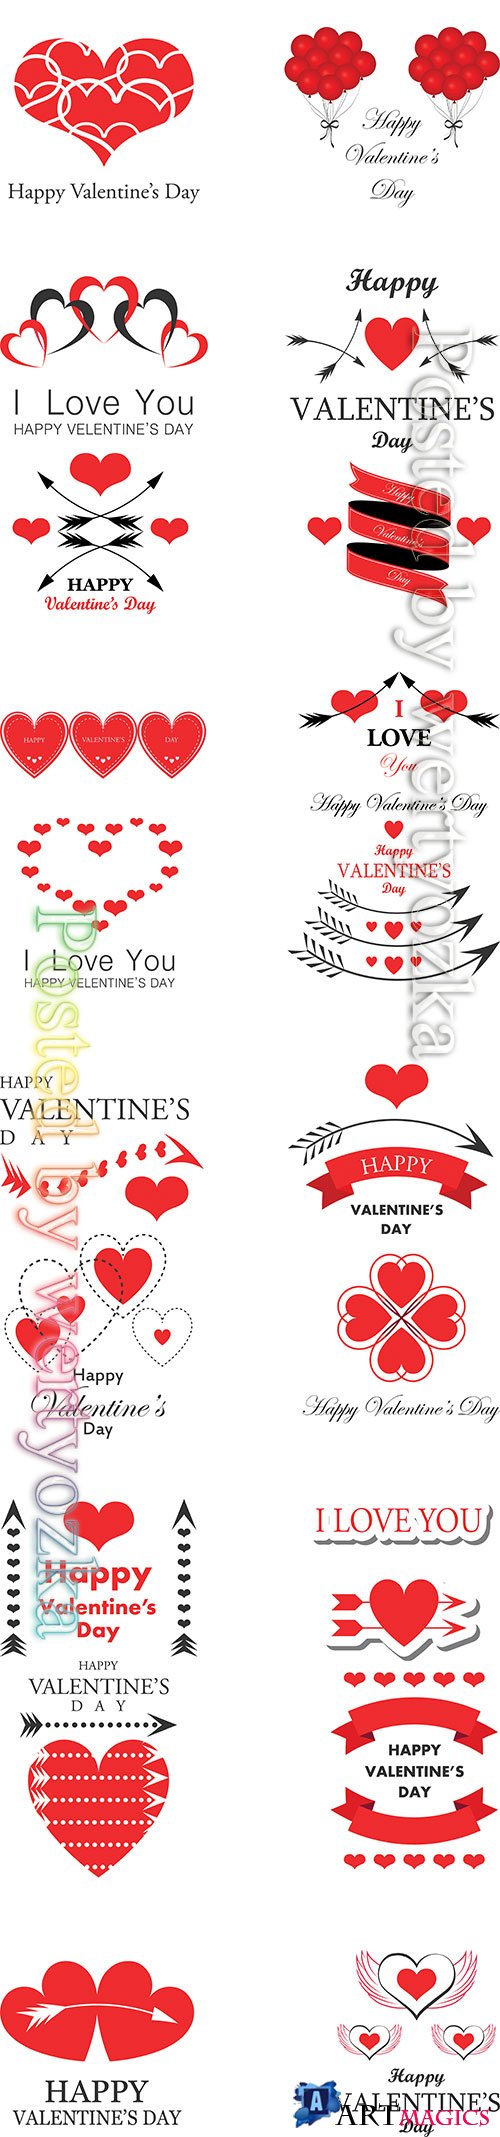 Wedding and Happy Valentine's Day logo